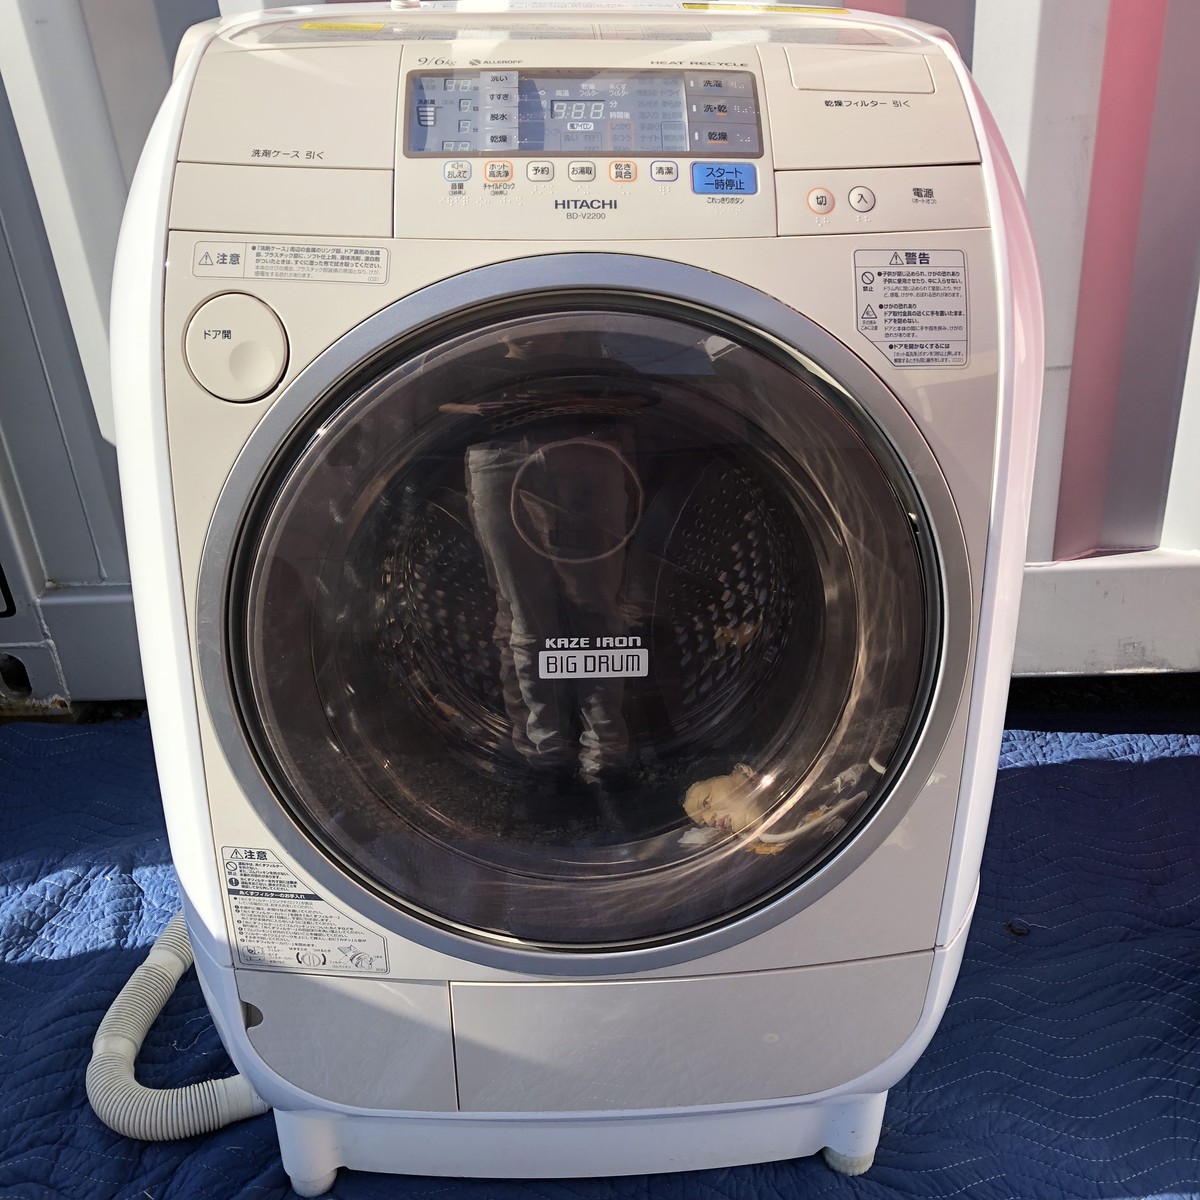 HITACHI 9.0kg 乾燥機能付きドラム式洗濯機 BD-V2200R | ECOPRODUCE